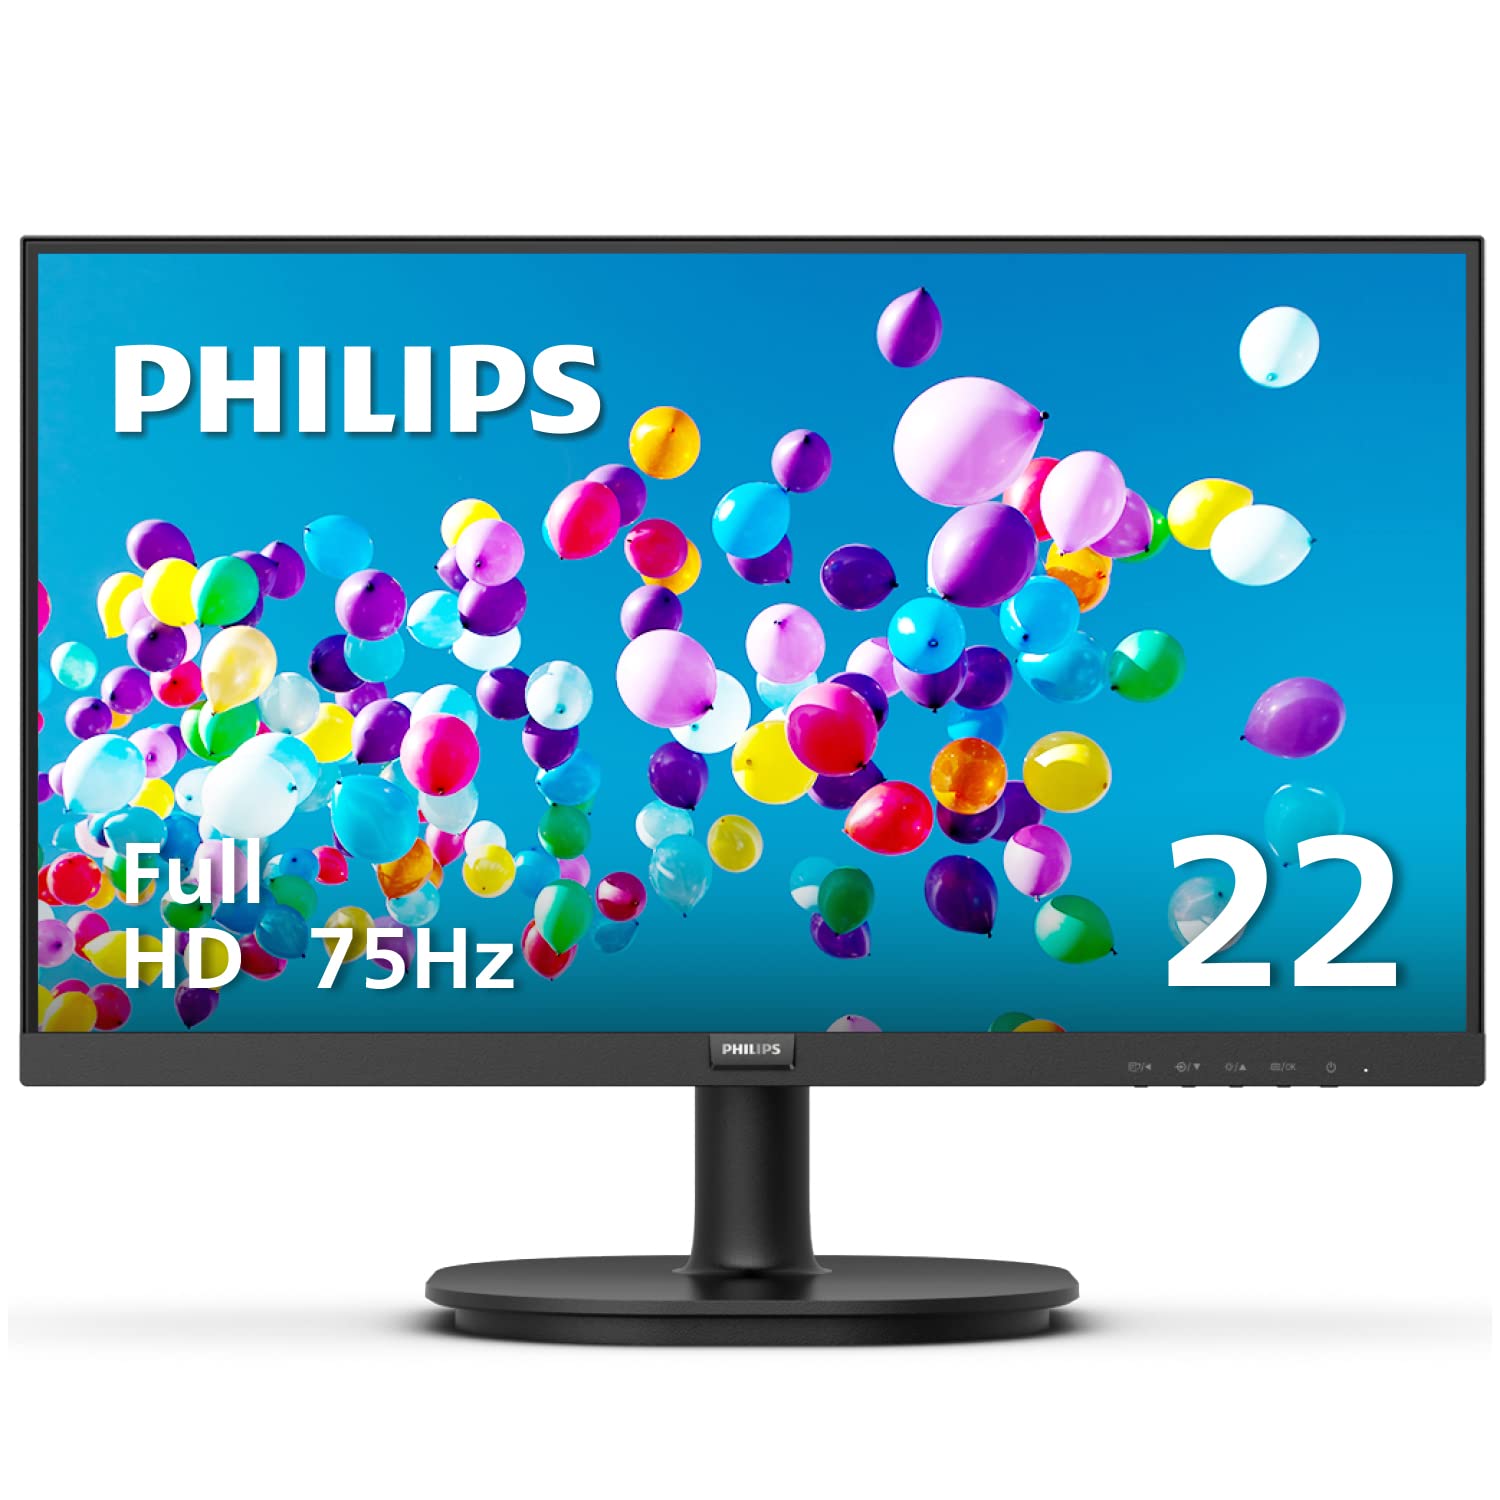 Philips Computer Monitors फिलिप्स प्योर 2